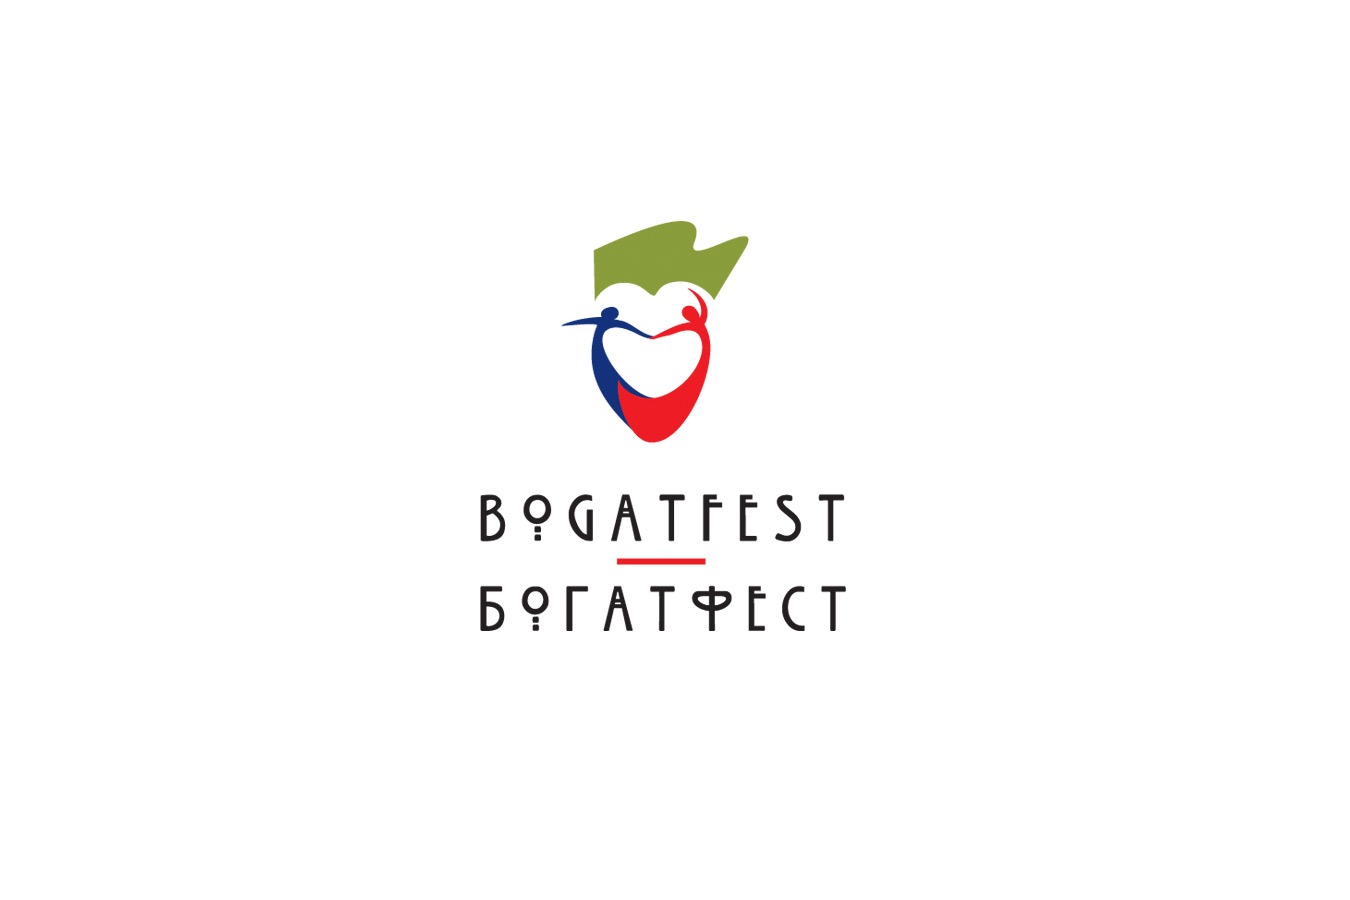 Izrada logotipa za medjunarodni festival Bogatfest iz Bogatica